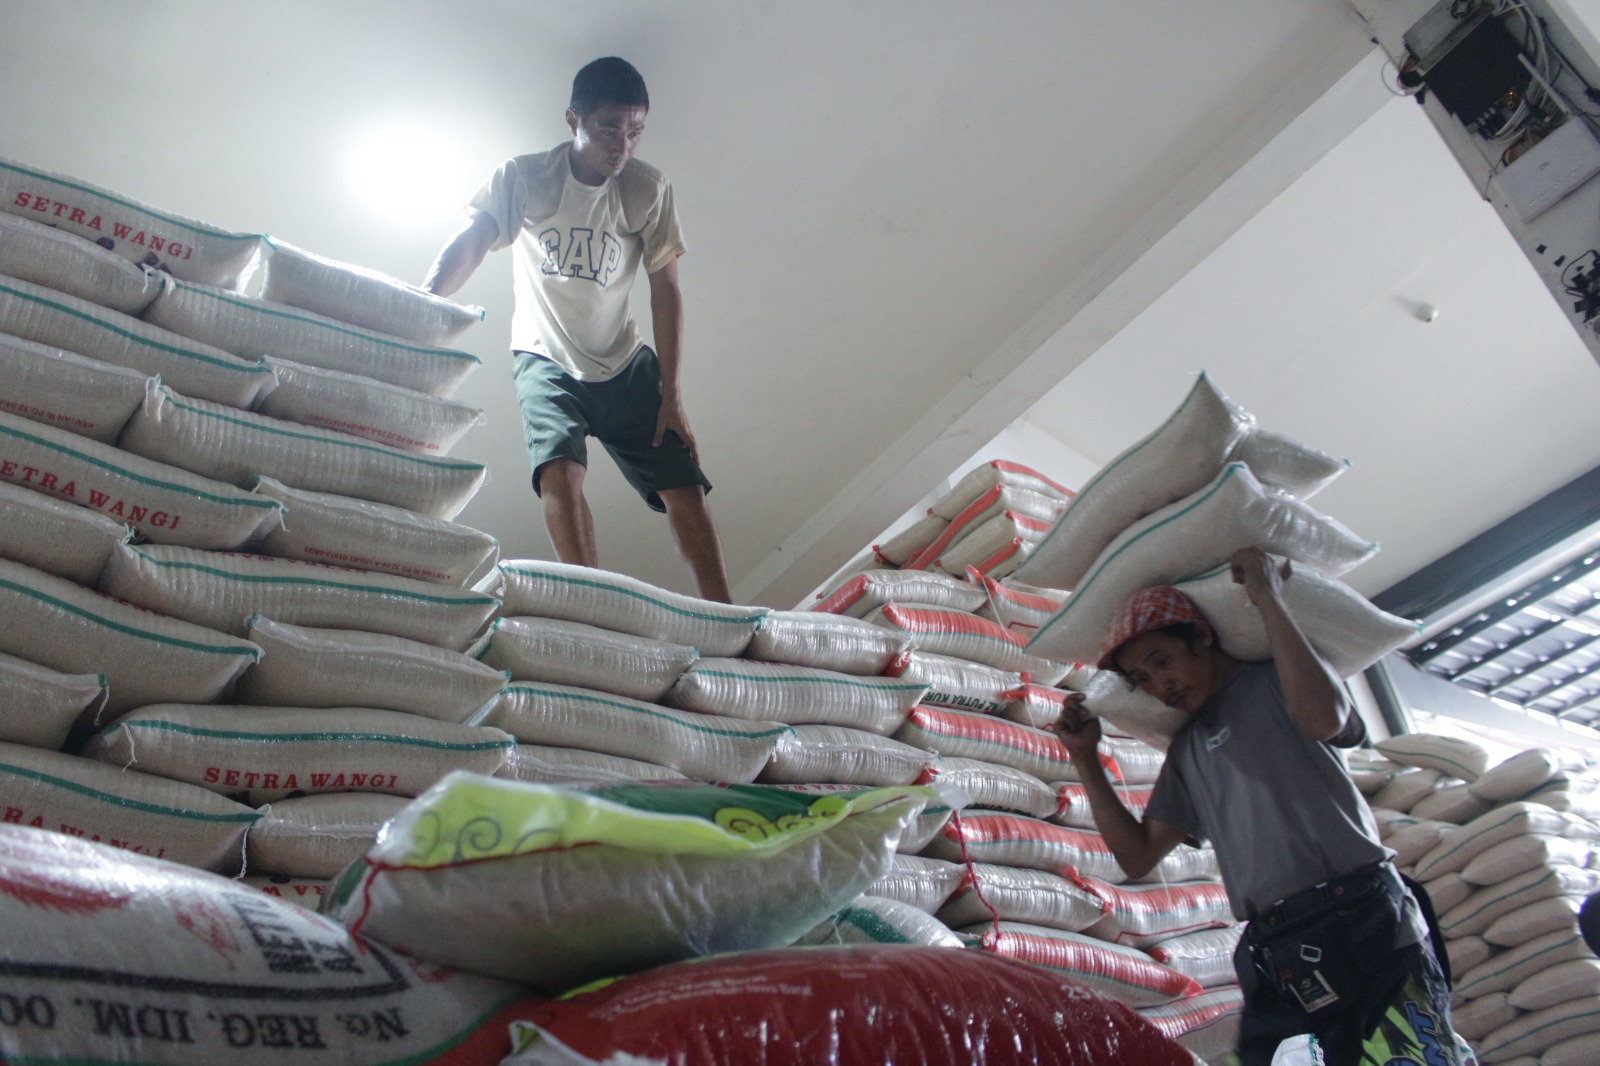 Ist. Bantuan beras di jabar akan digulirkan lagi oleh DKPP. Foto. Pandu Muslim Jabar ekspres